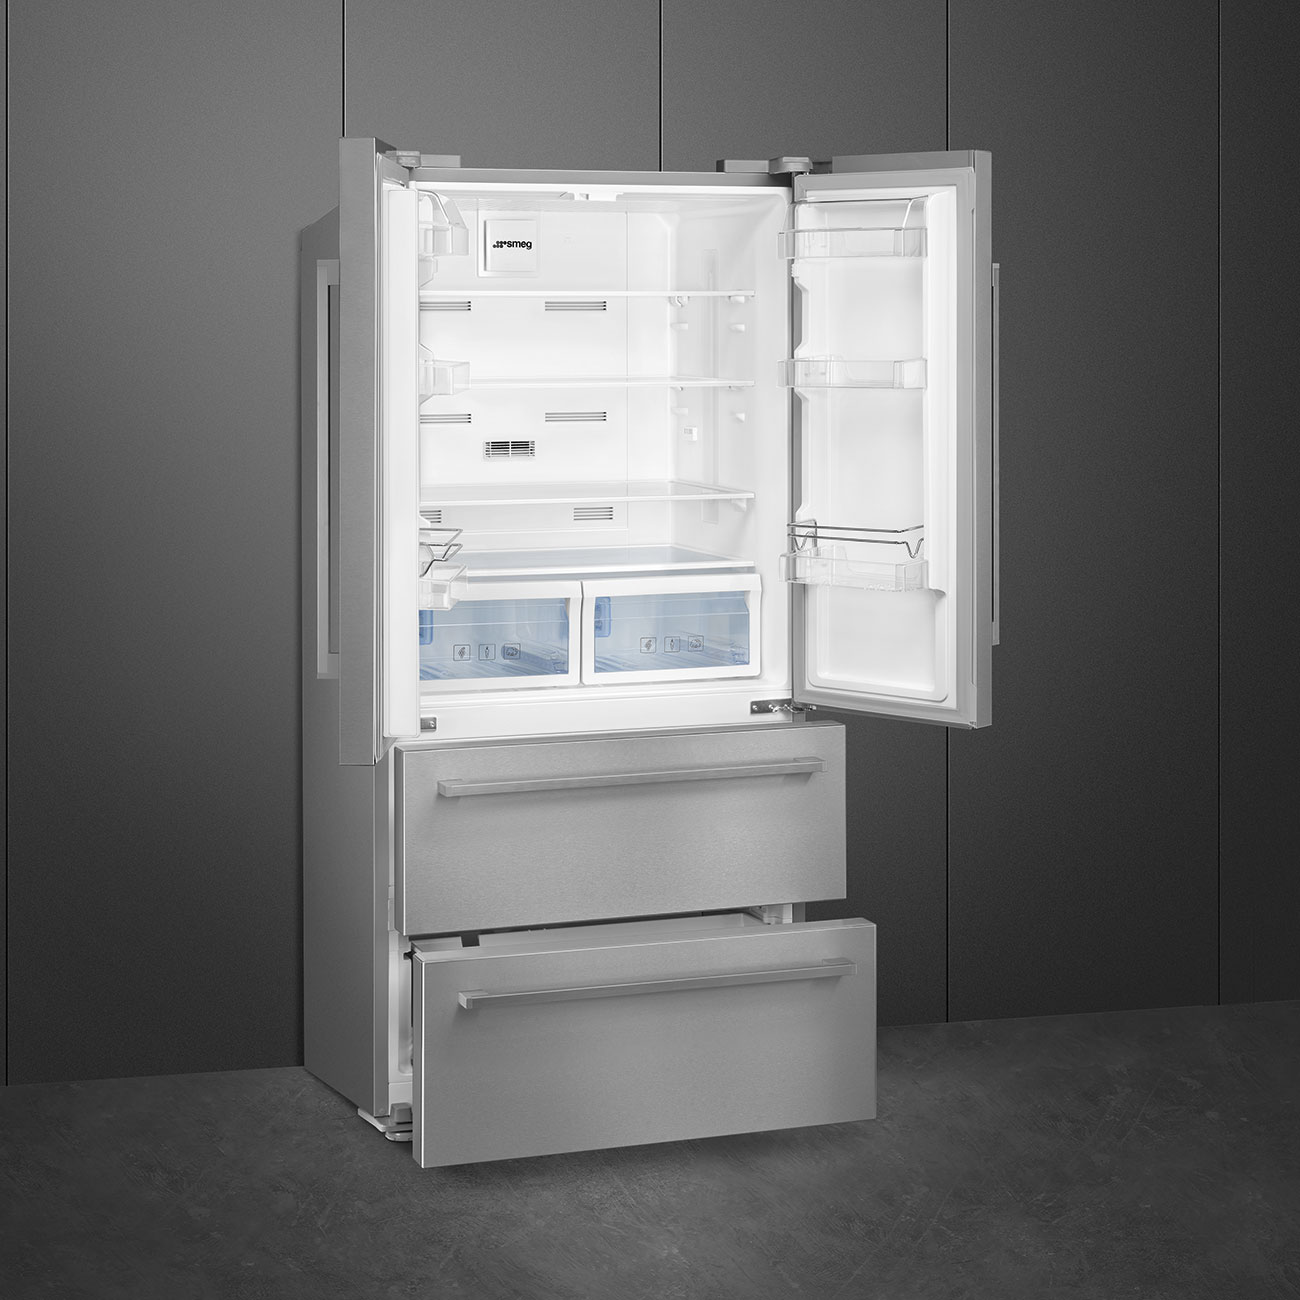 2 Doors & 2 Drawers Free standing refrigerator - Smeg_5